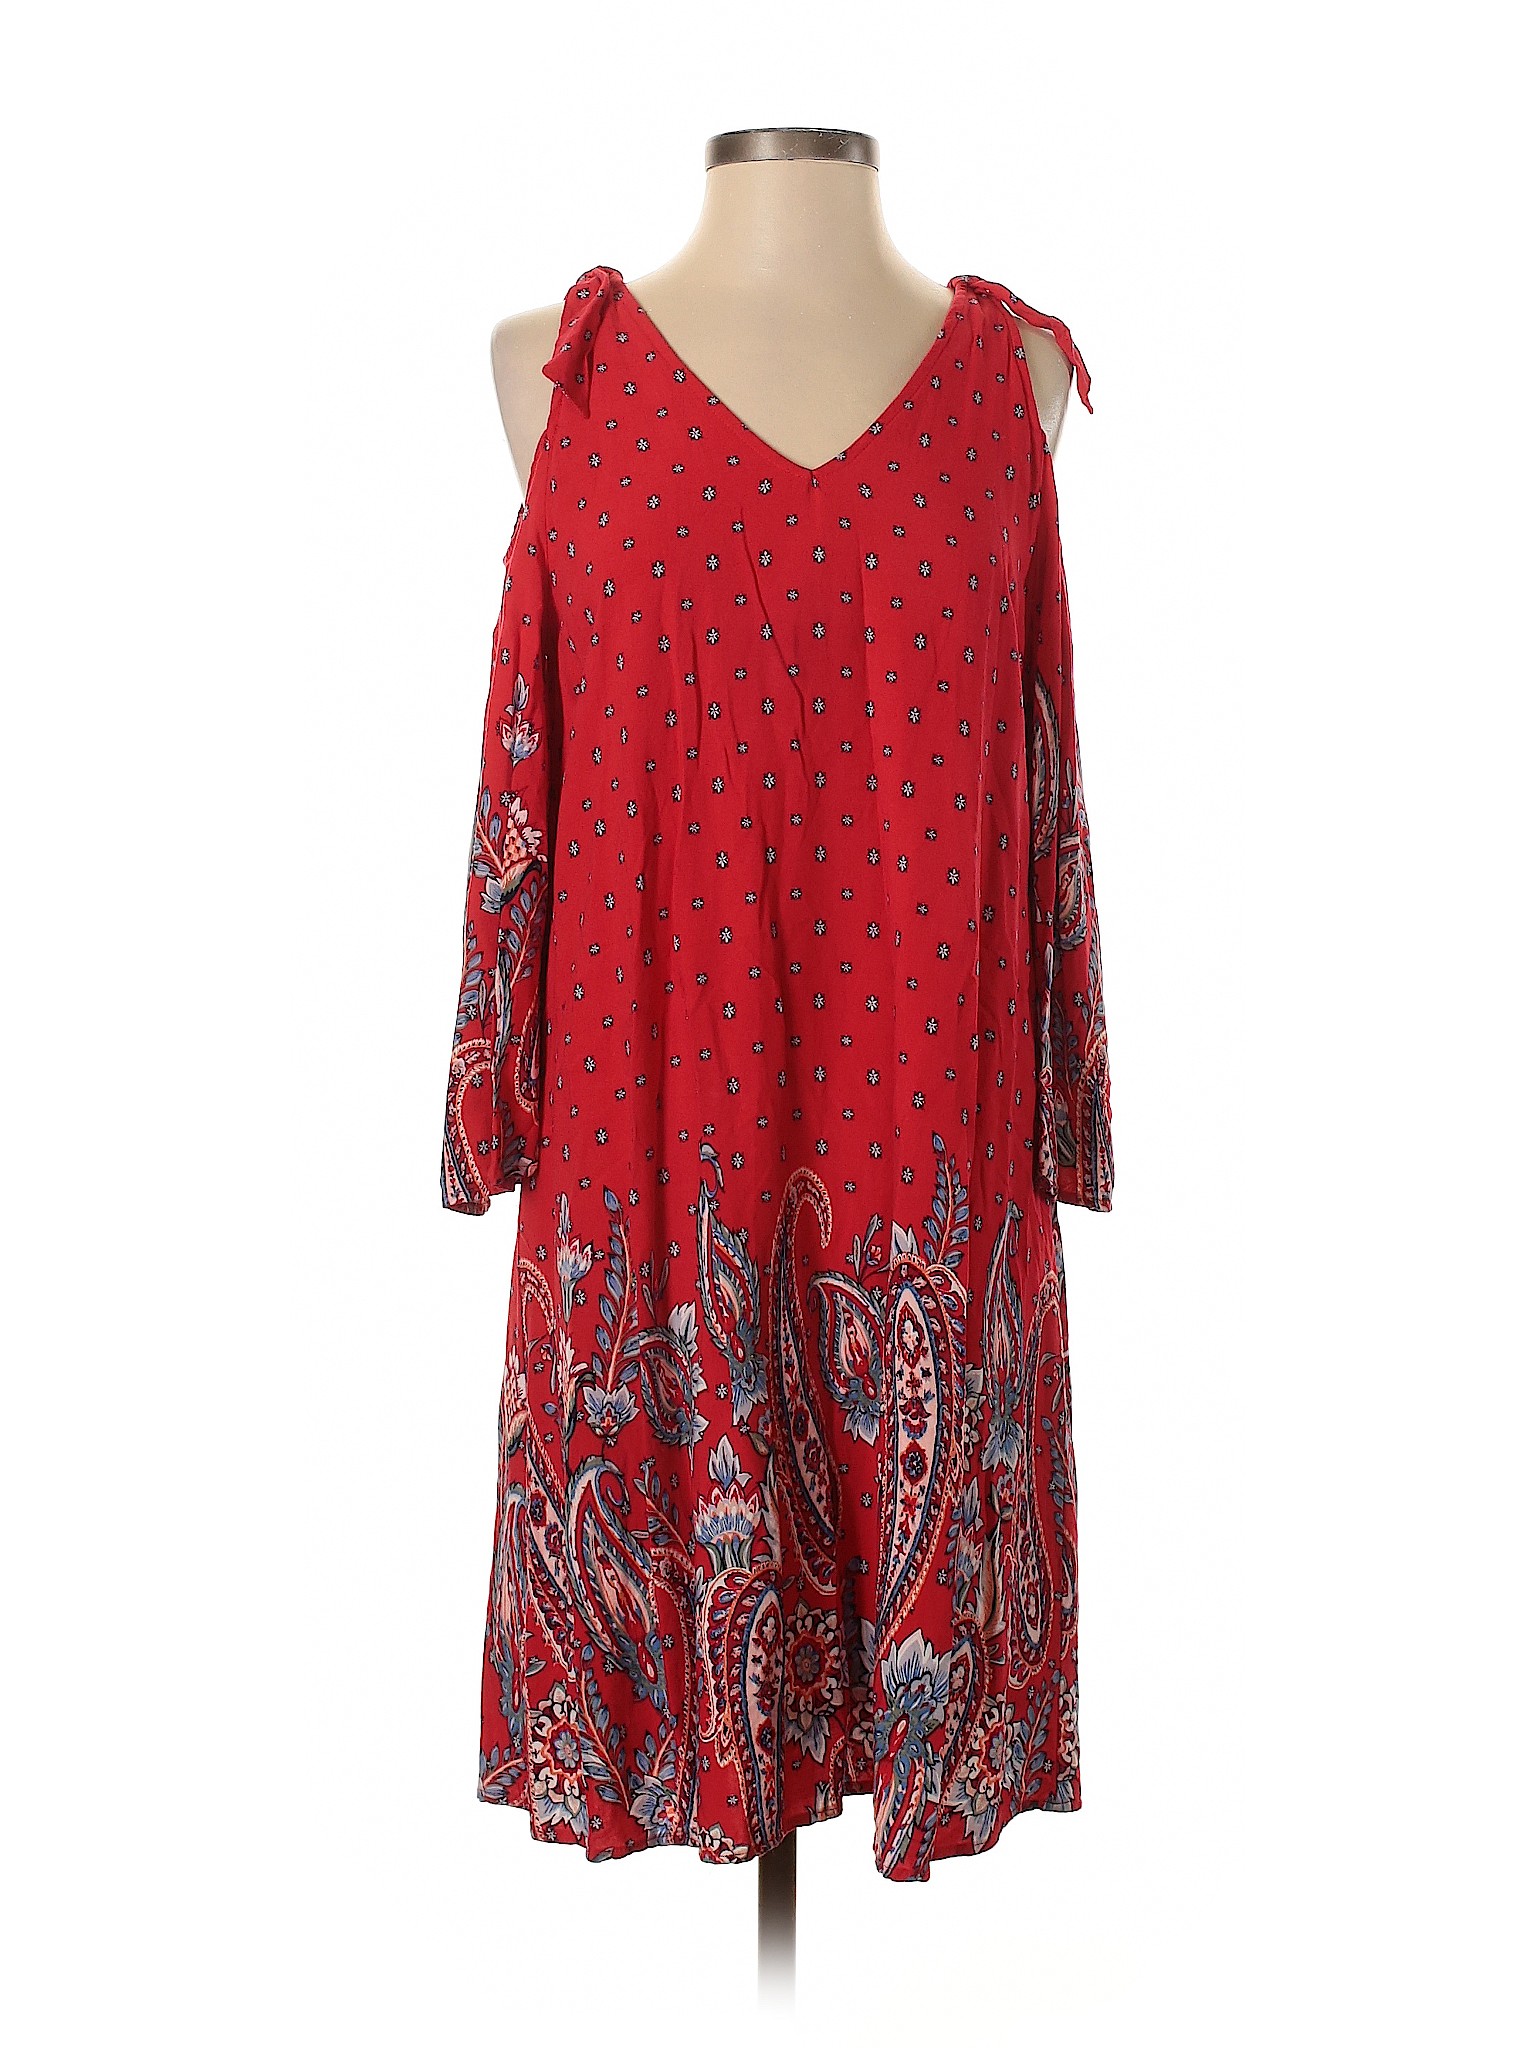 C established 1946 Women Red Casual Dress S | eBay